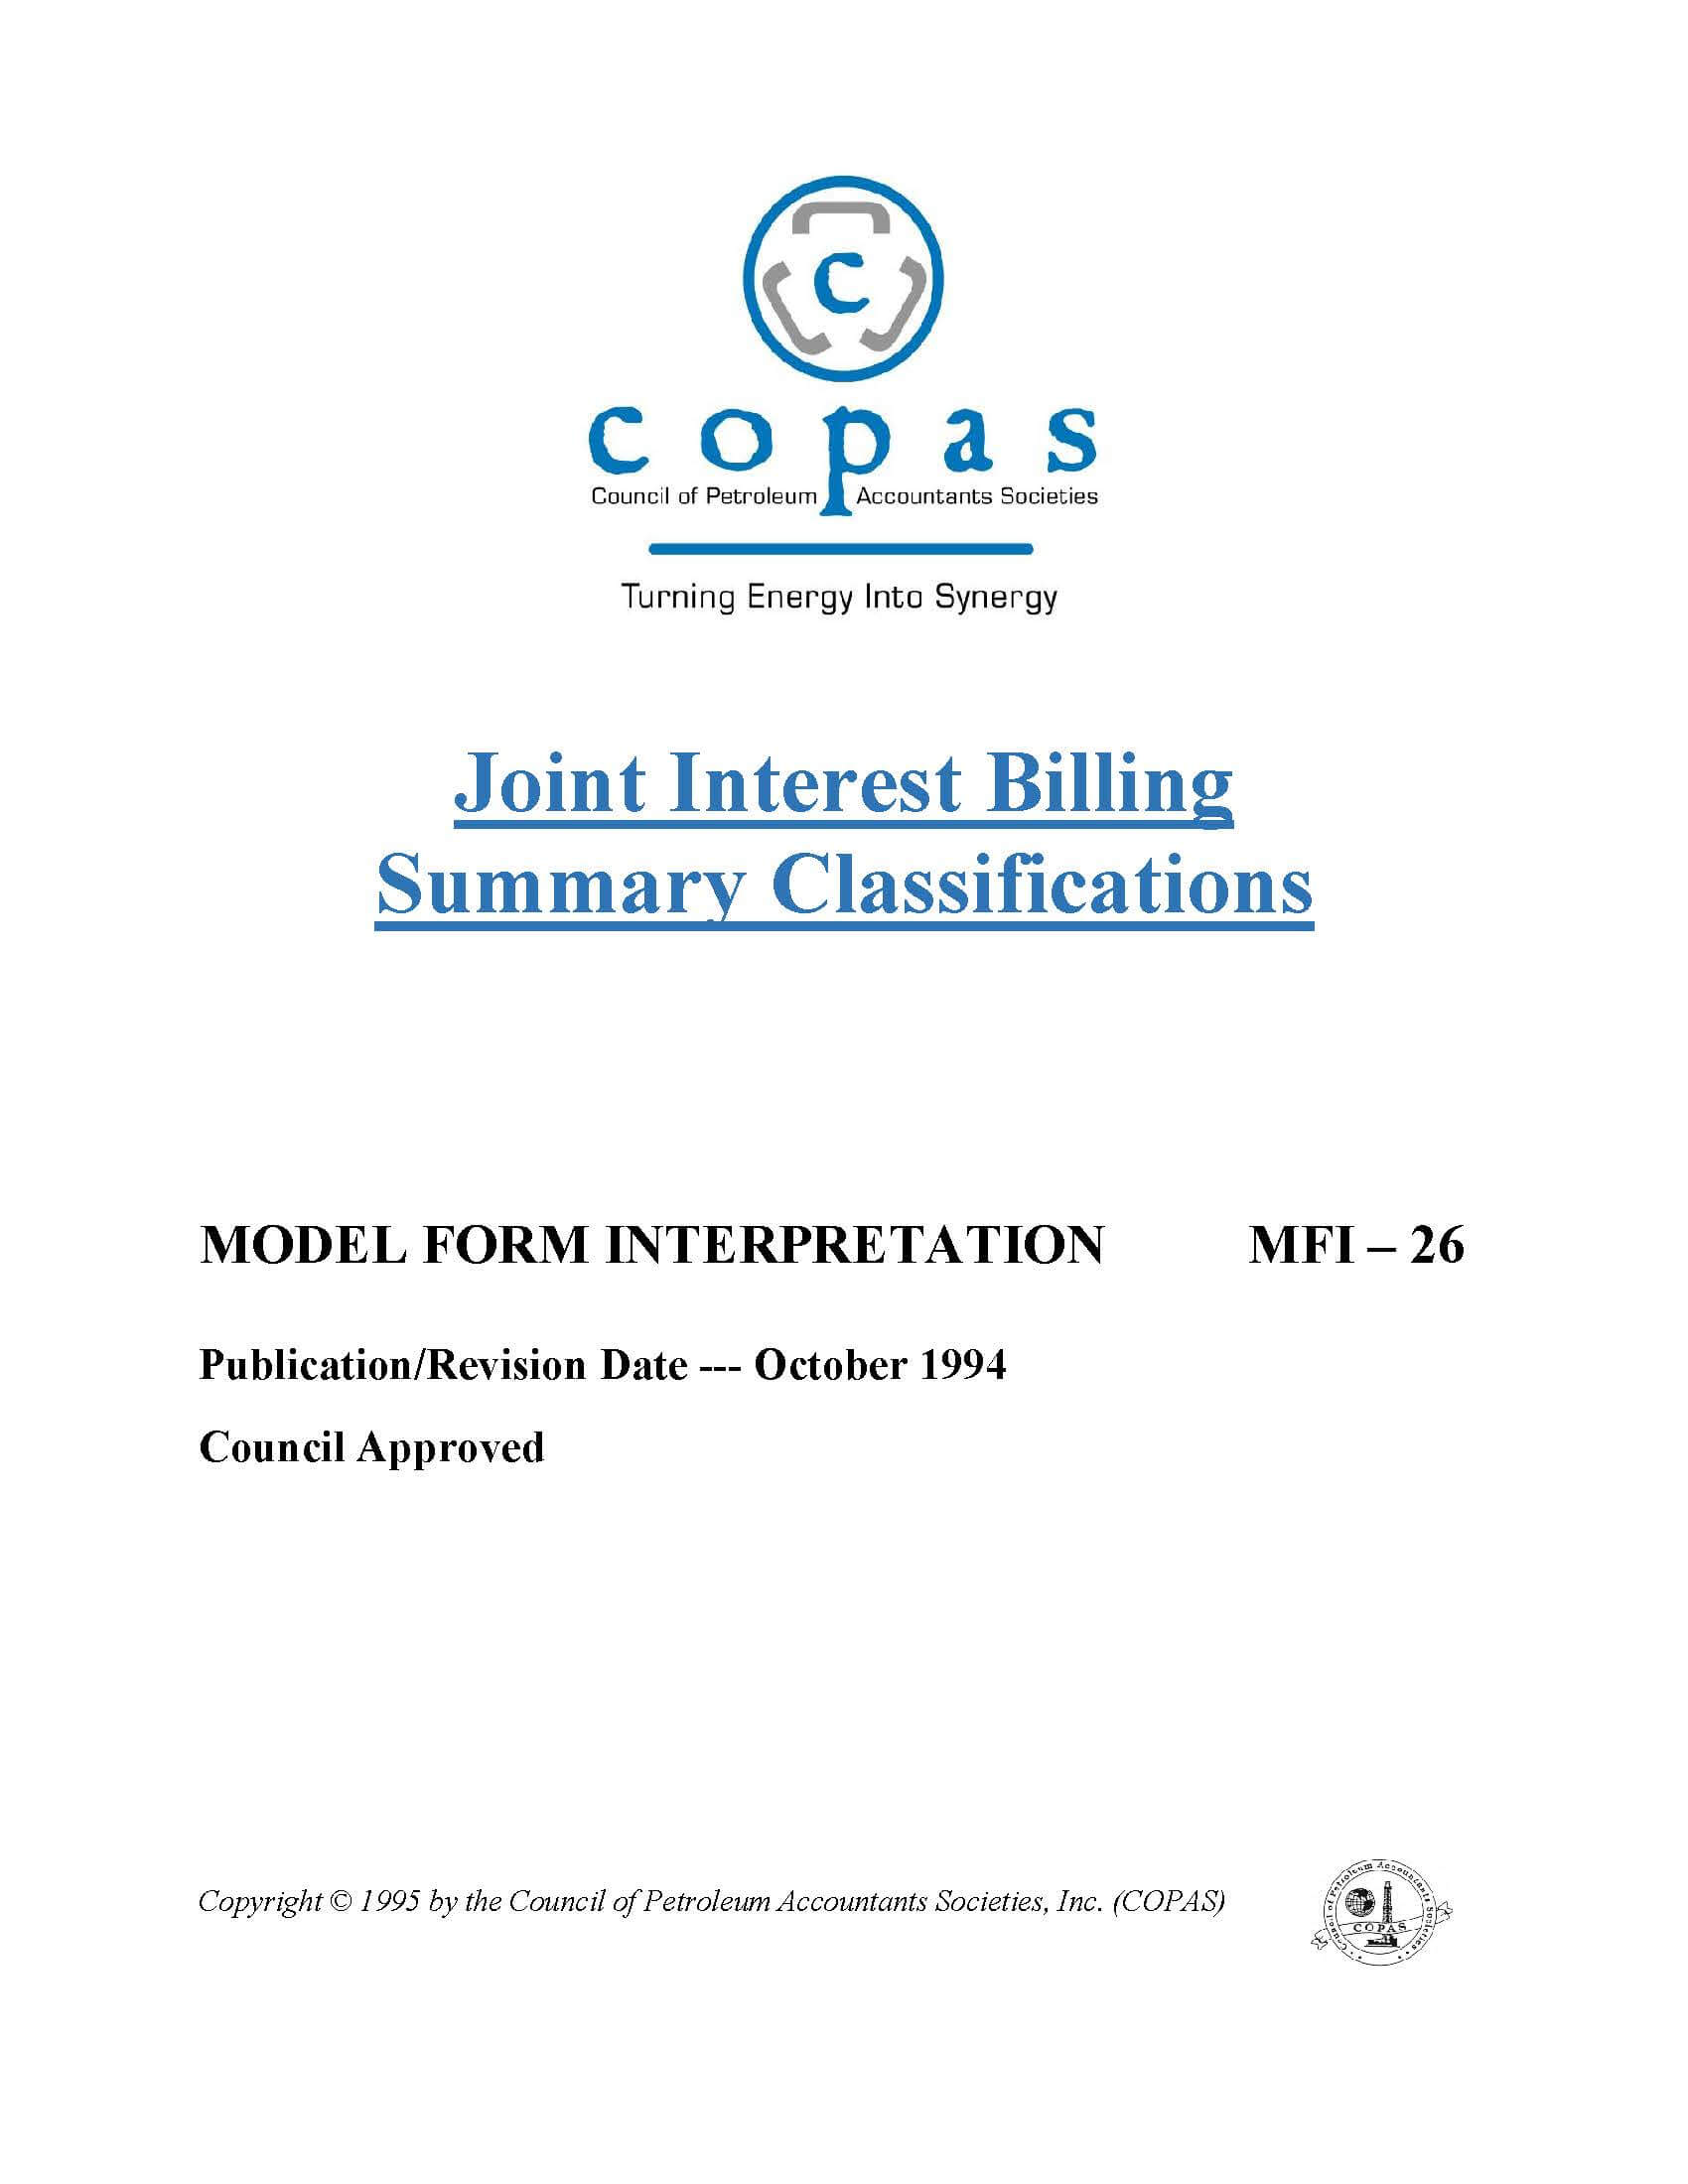 MFI-26 Joint Interest Billing Summary Classifications - products MFI 26 Joint Interest Billing Summary Classifications - Council of Petroleum Accountants Societies